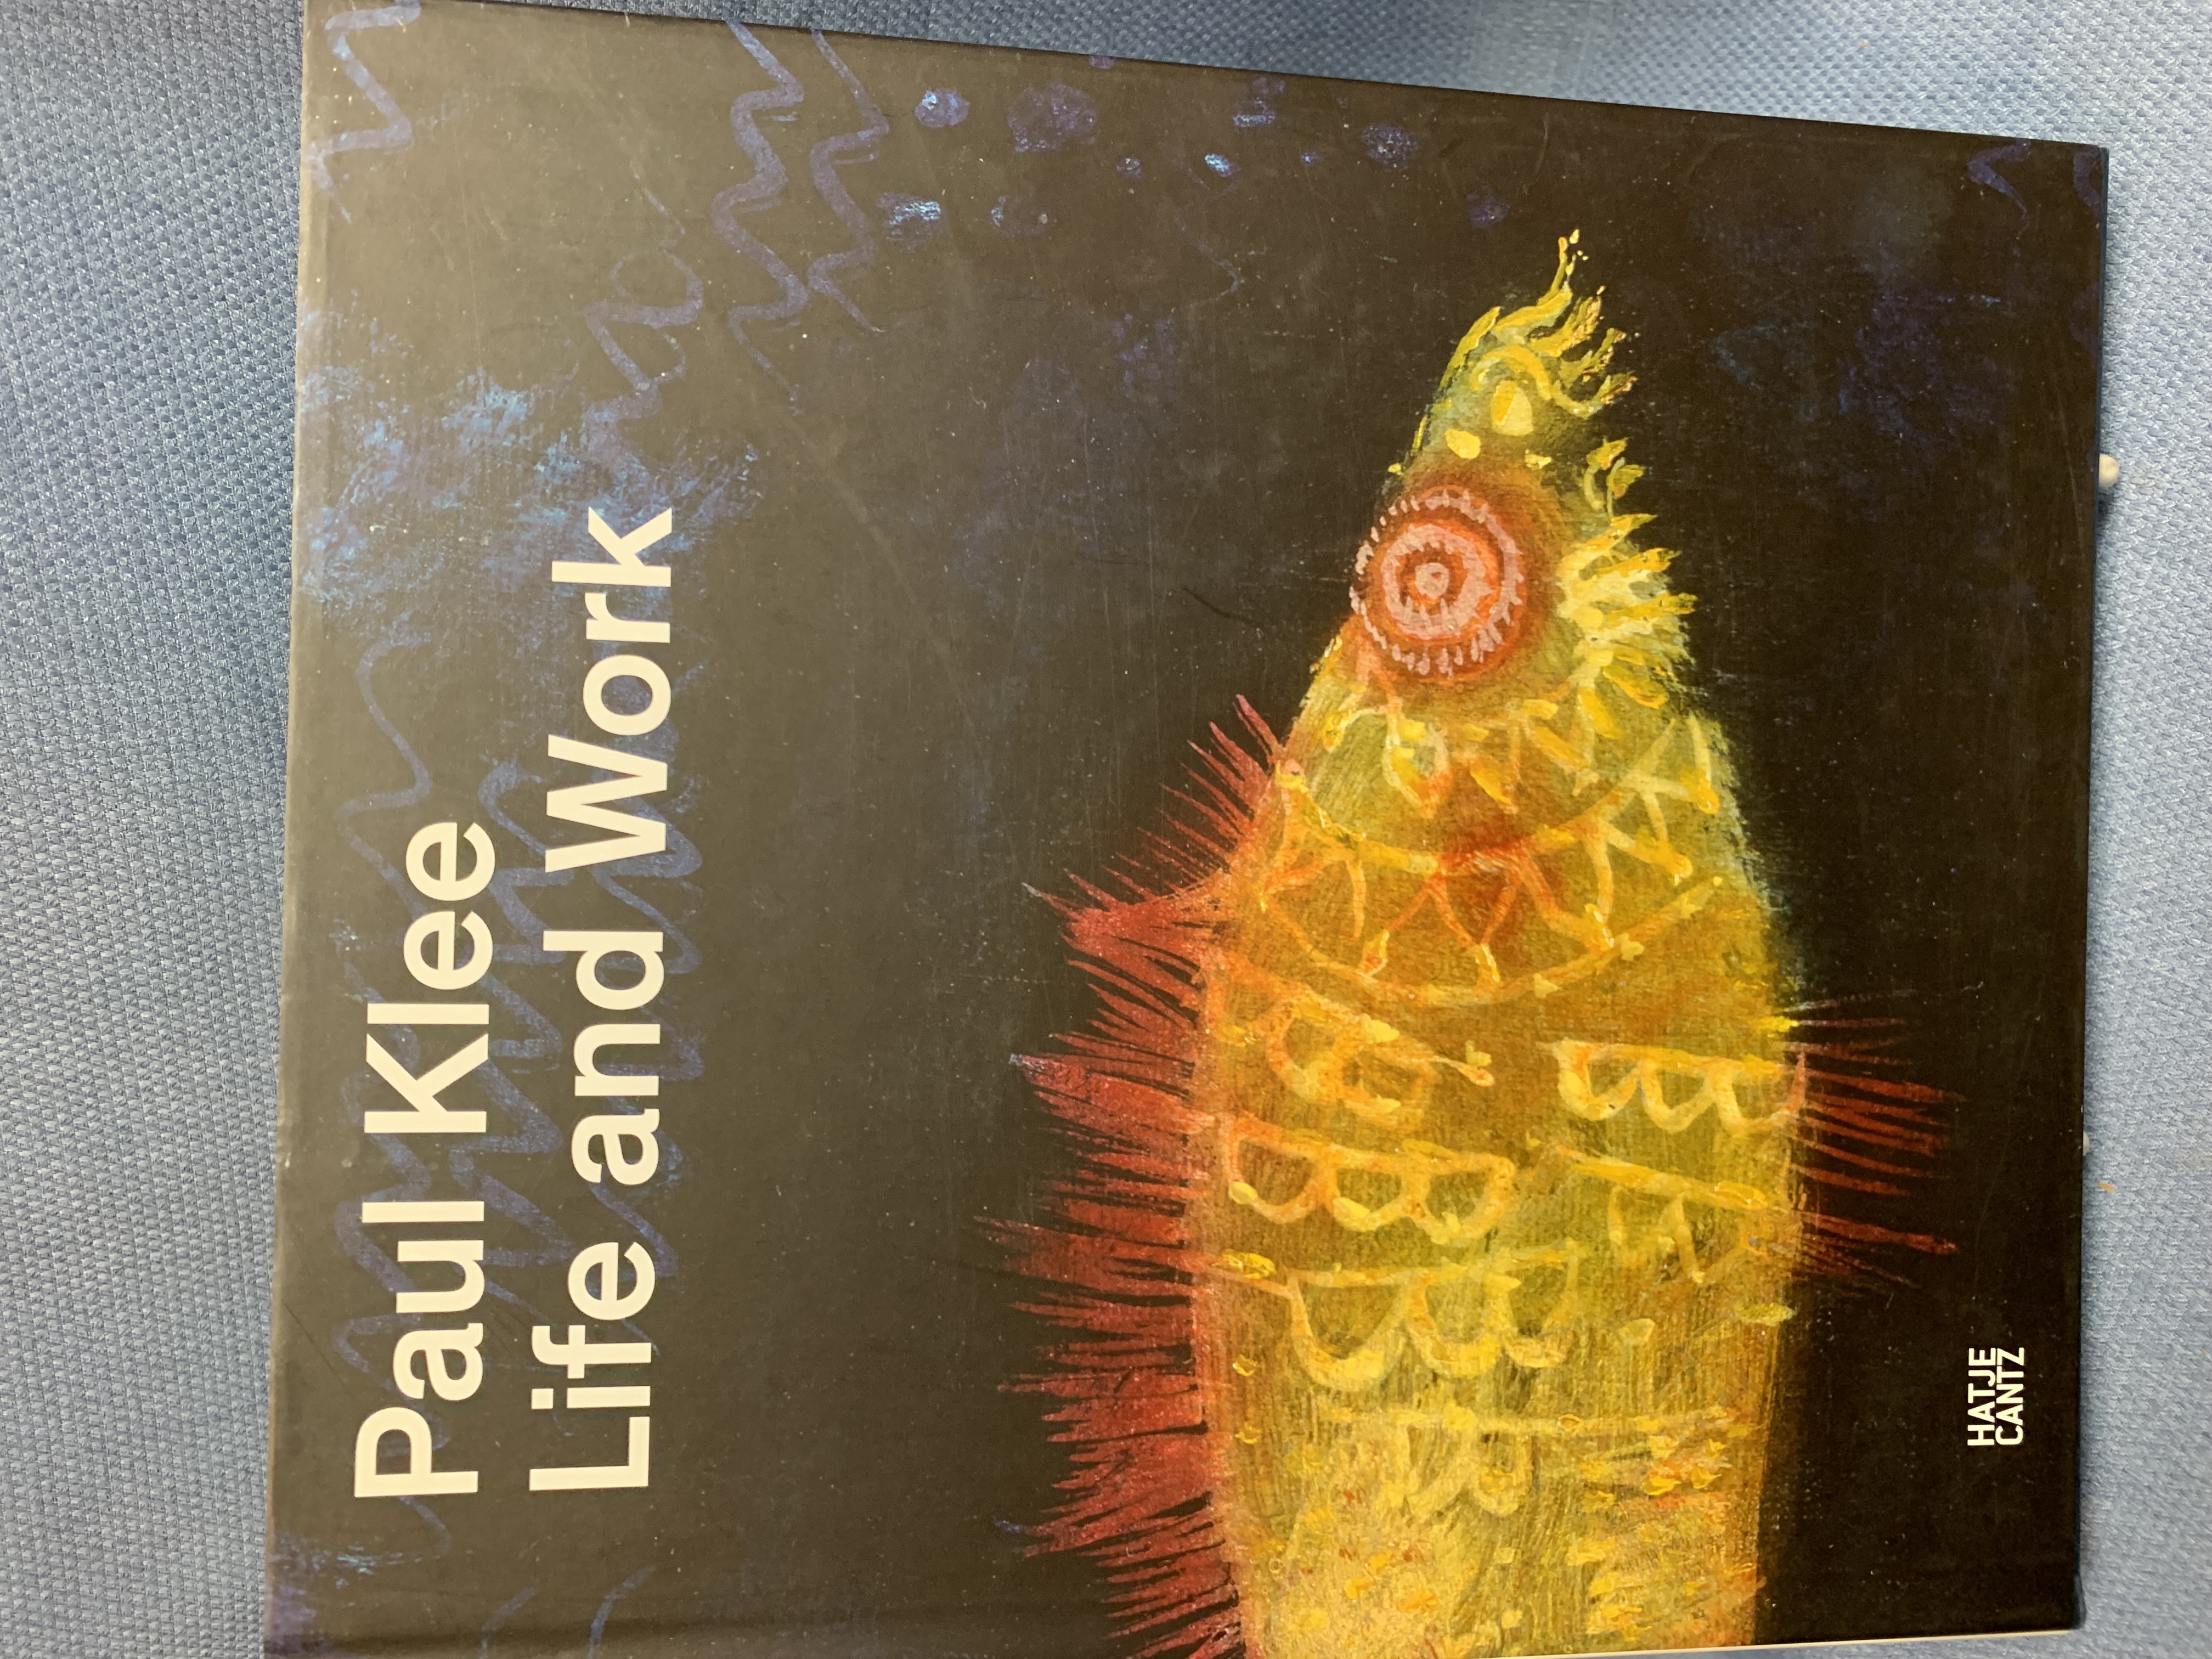 Paul Klee, Life and Work - Christine Hopfengart and Michael Baumgartner